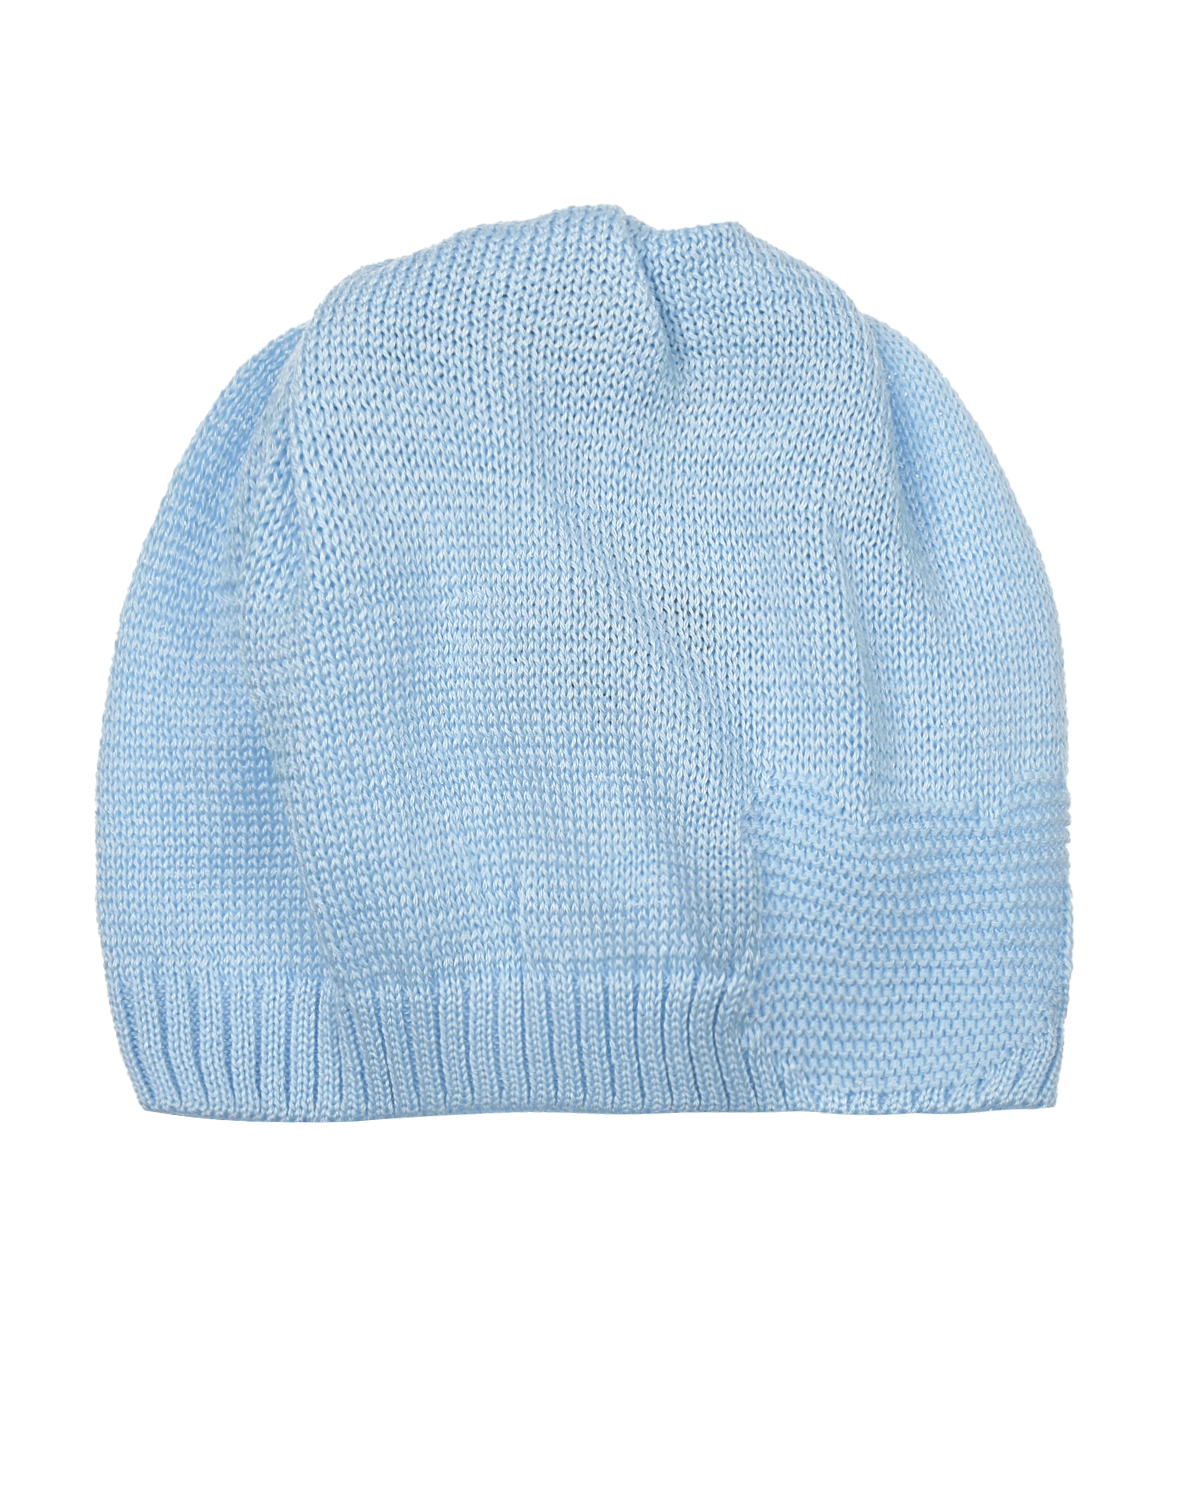 Голубая вязаная шапка Marlu, размер 68/74, цвет голубой